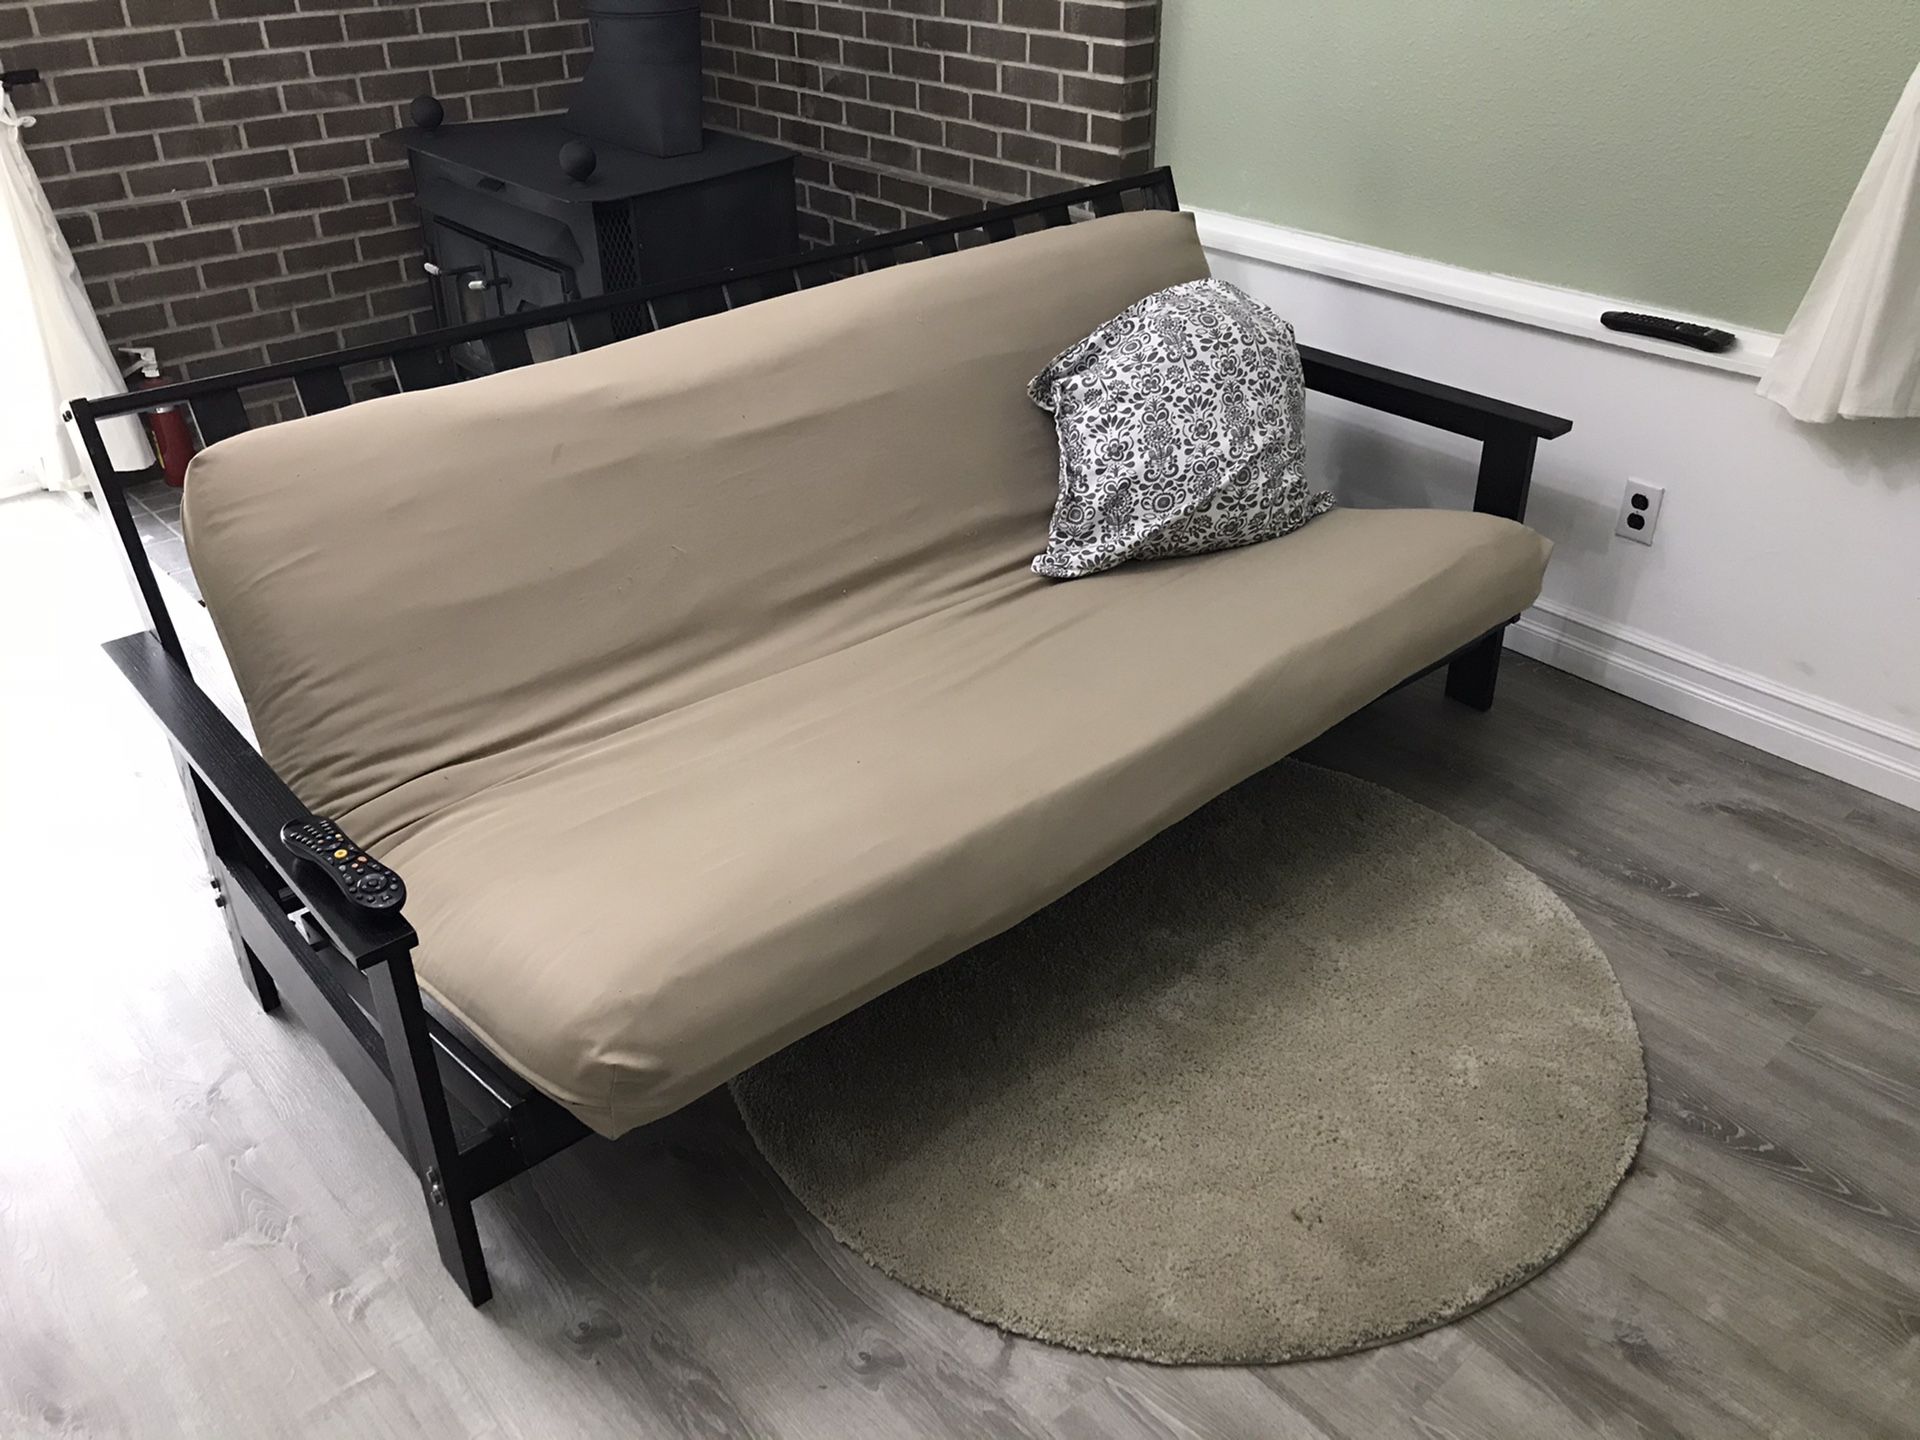 Futon bed sofa with area rug